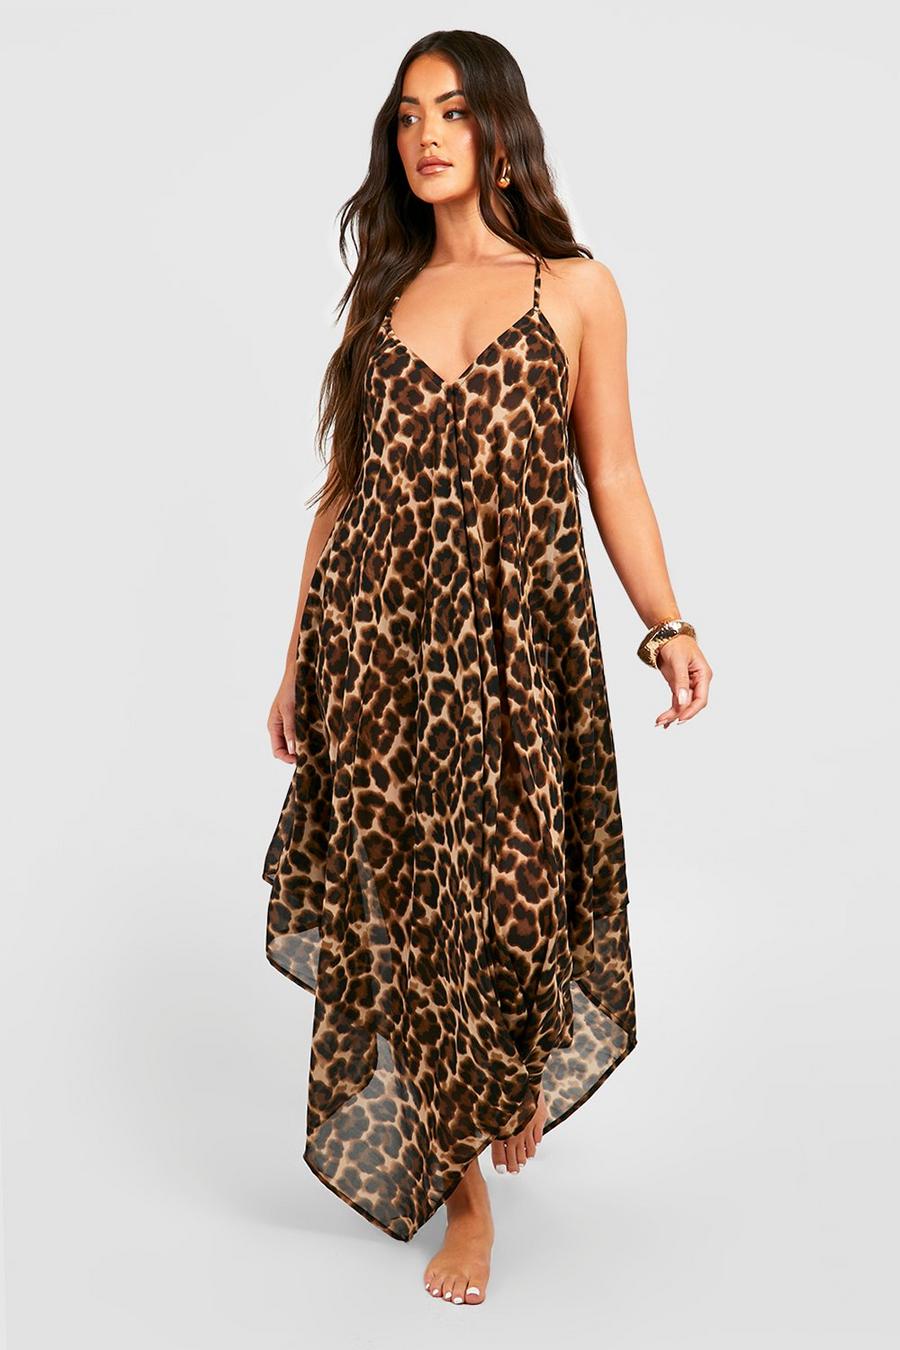 Brown Leopard Chiffon Beach Maxi Dress